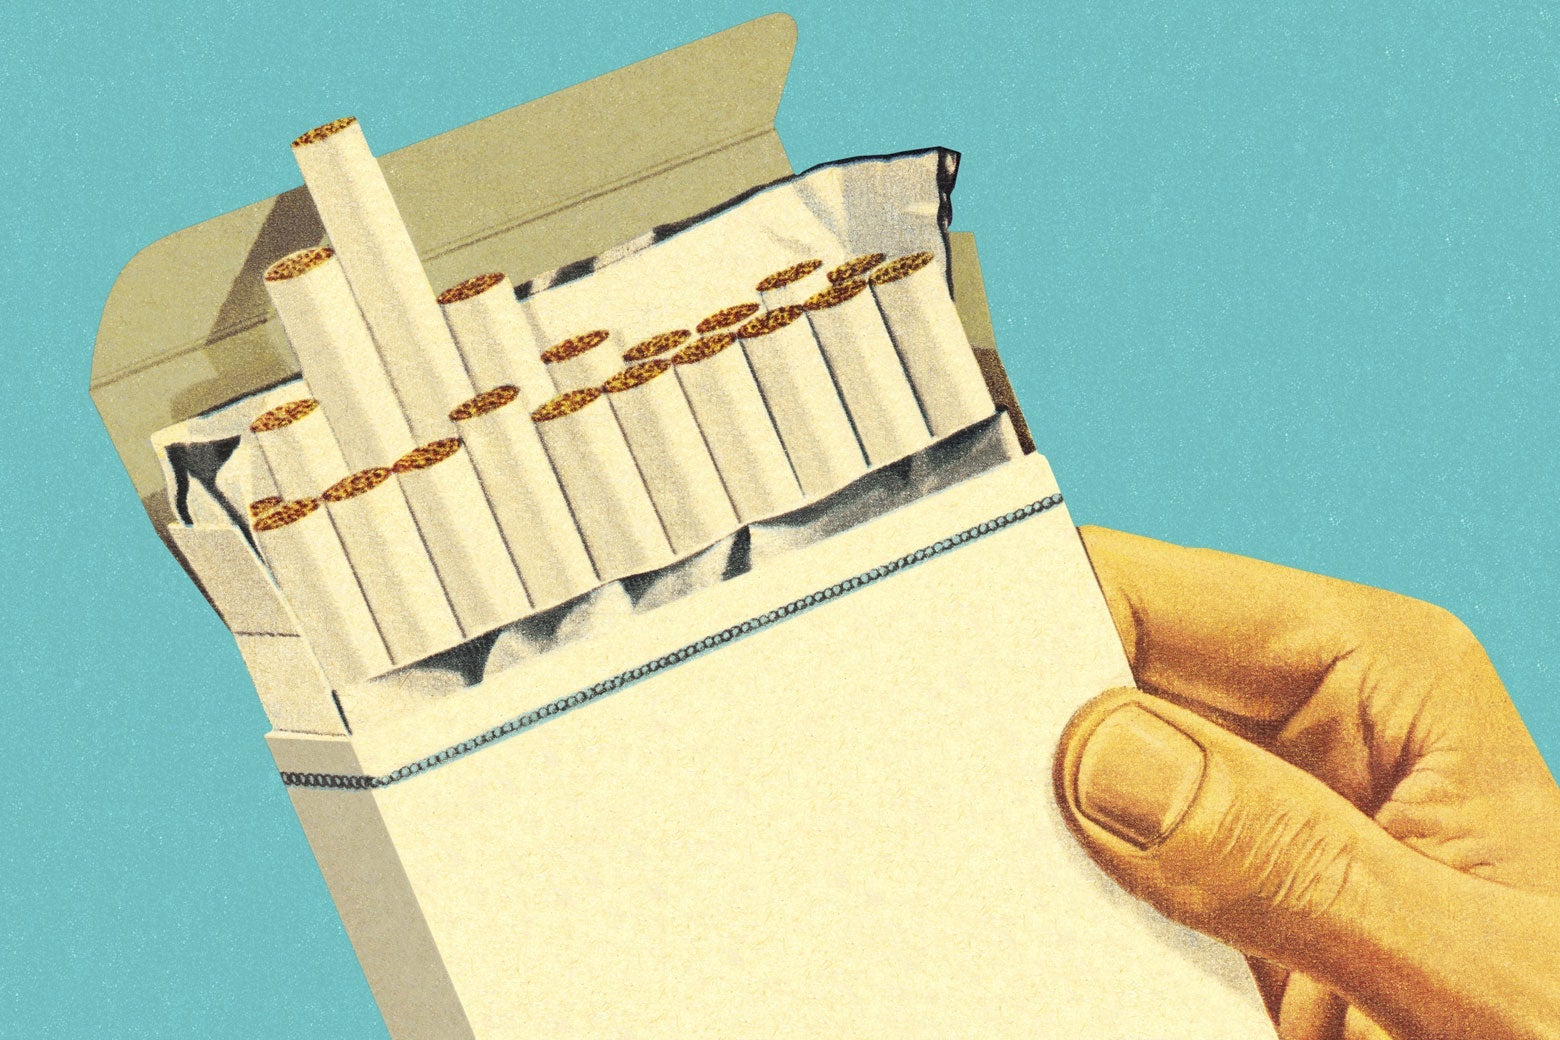 Photo illustration of a carton of cigarettes.